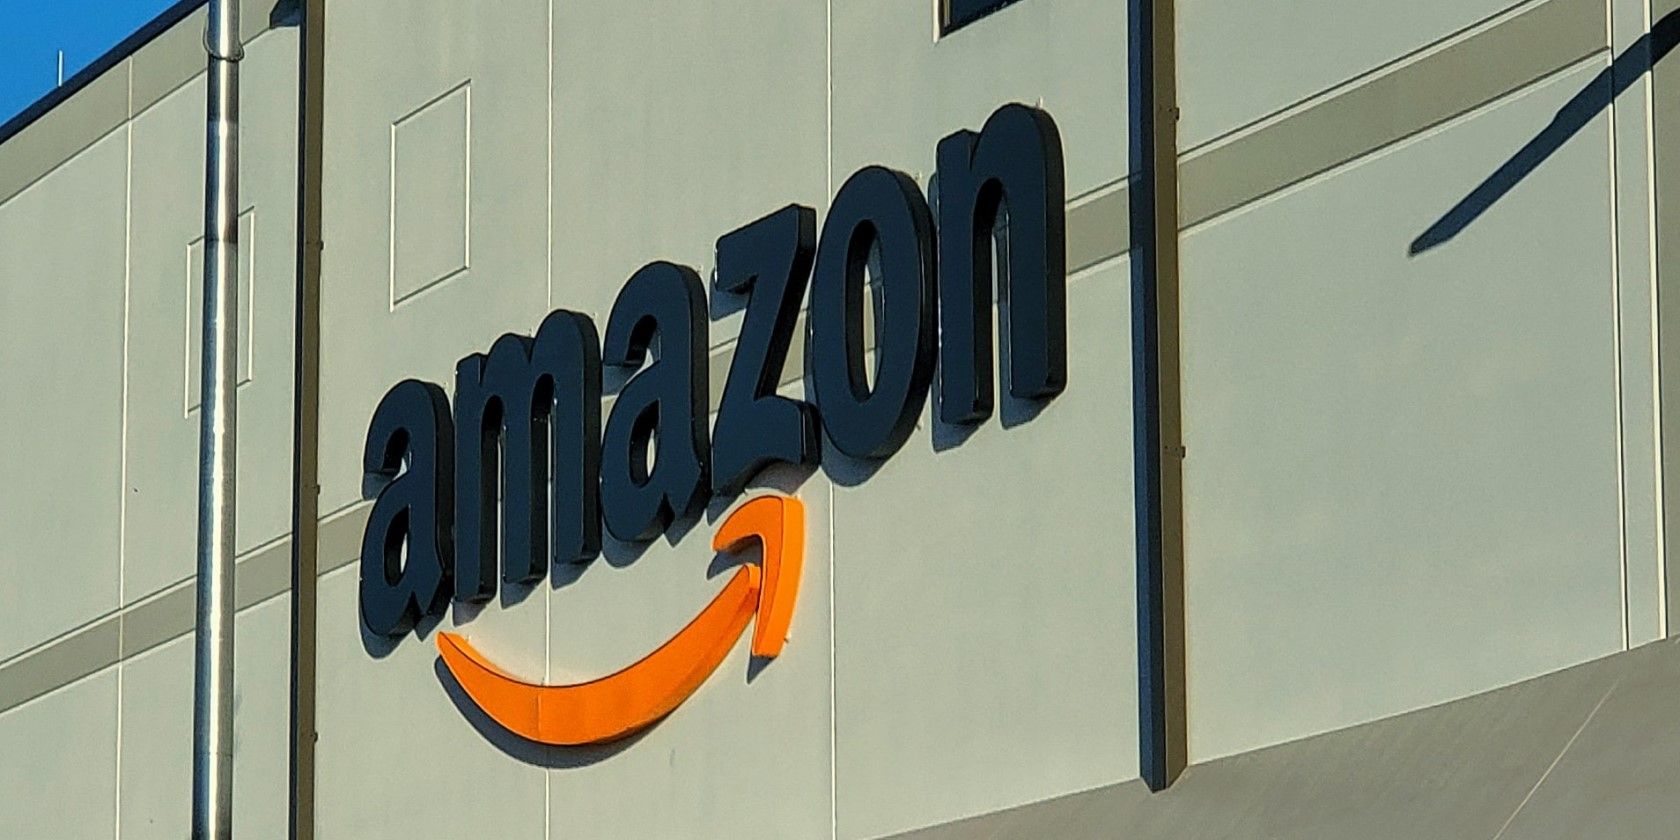 Amazon logo on a building